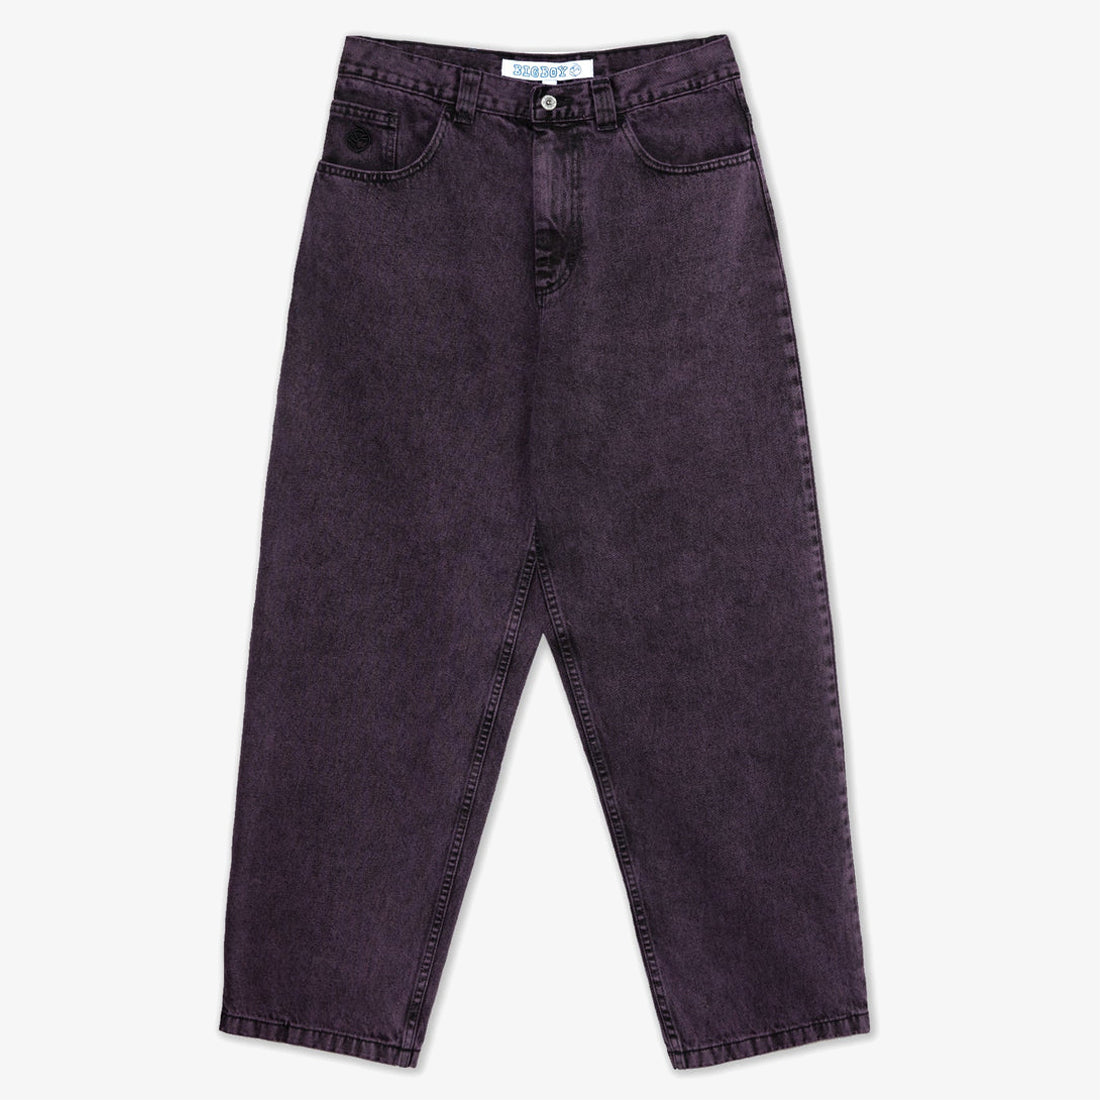 Big Boy Jeans (Purple Black)